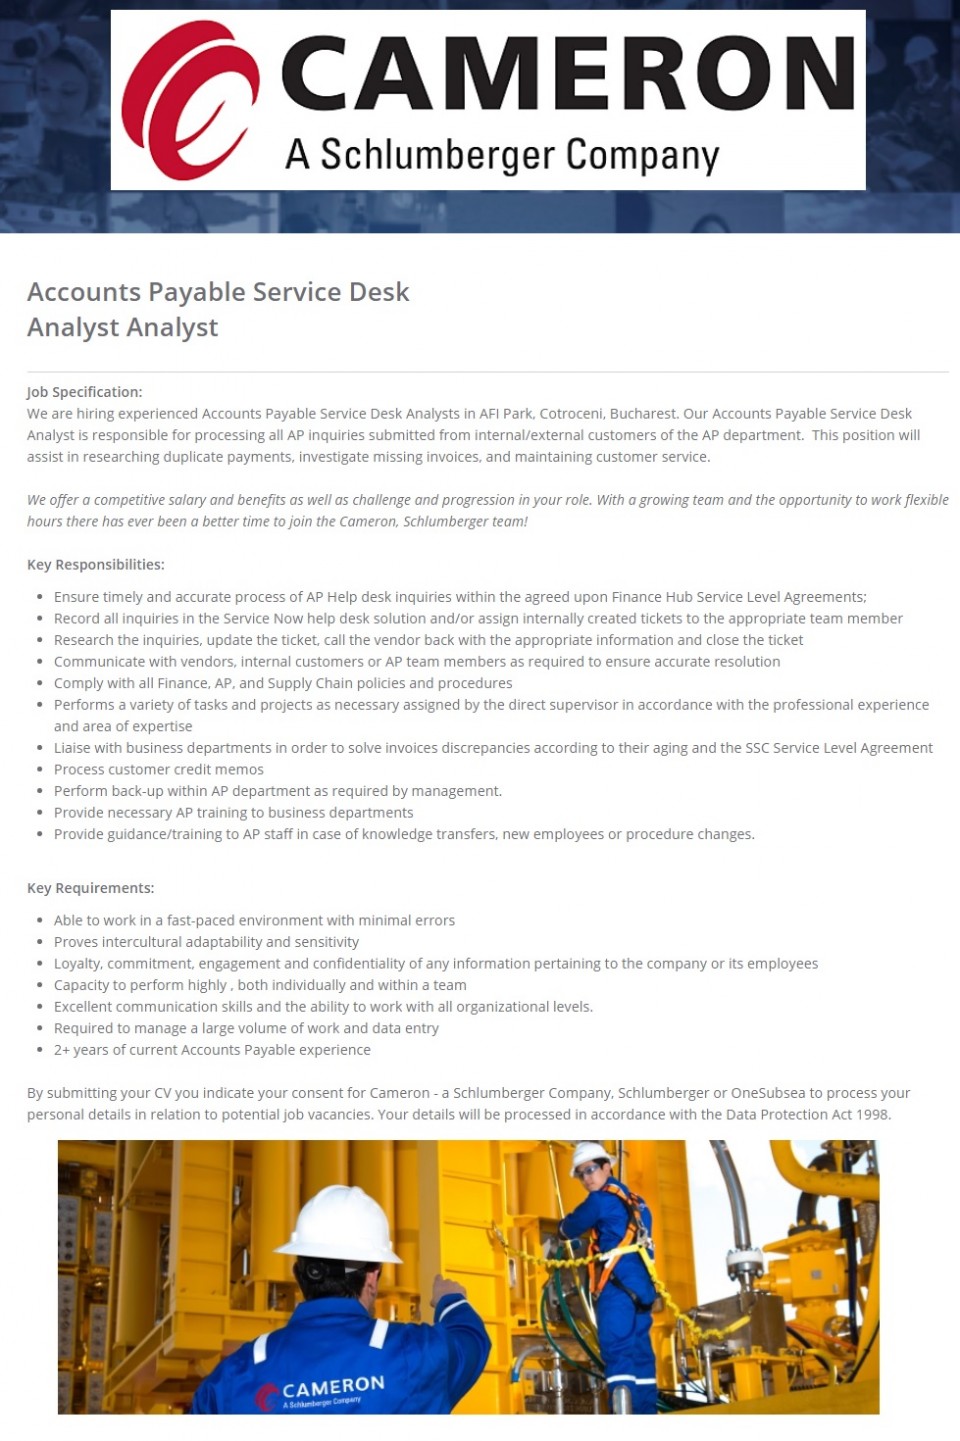 Accounts Payable Service Desk Analyst Cameron Apply On Ejobs